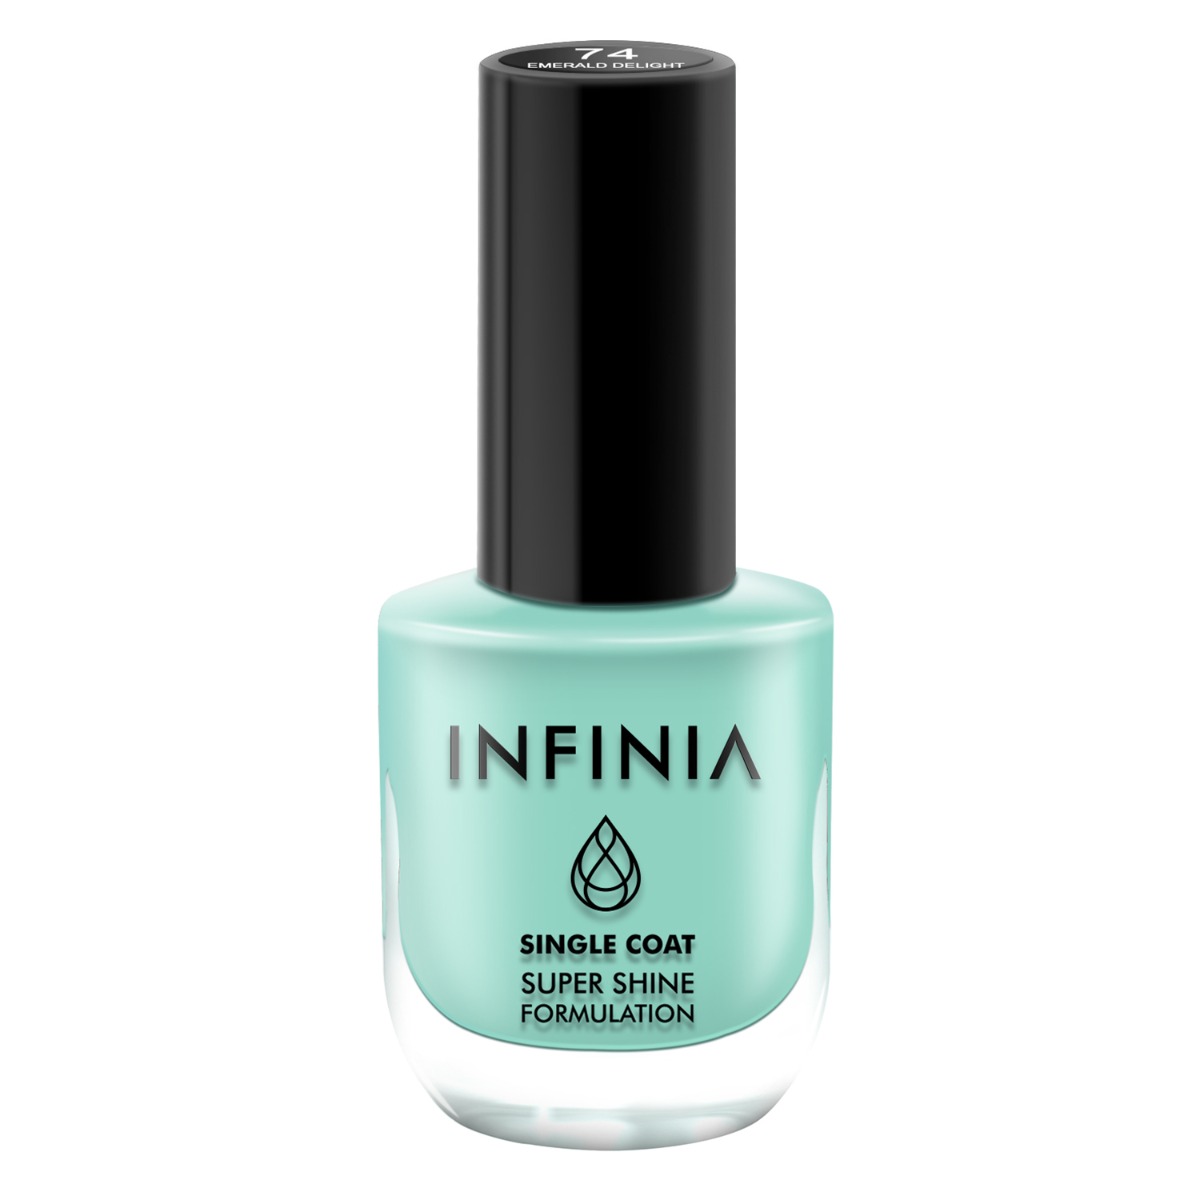 INFINIA Single Coat Super Shine Nail Polish With Ultra High Gloss, 12ml-074 Emerald Delight